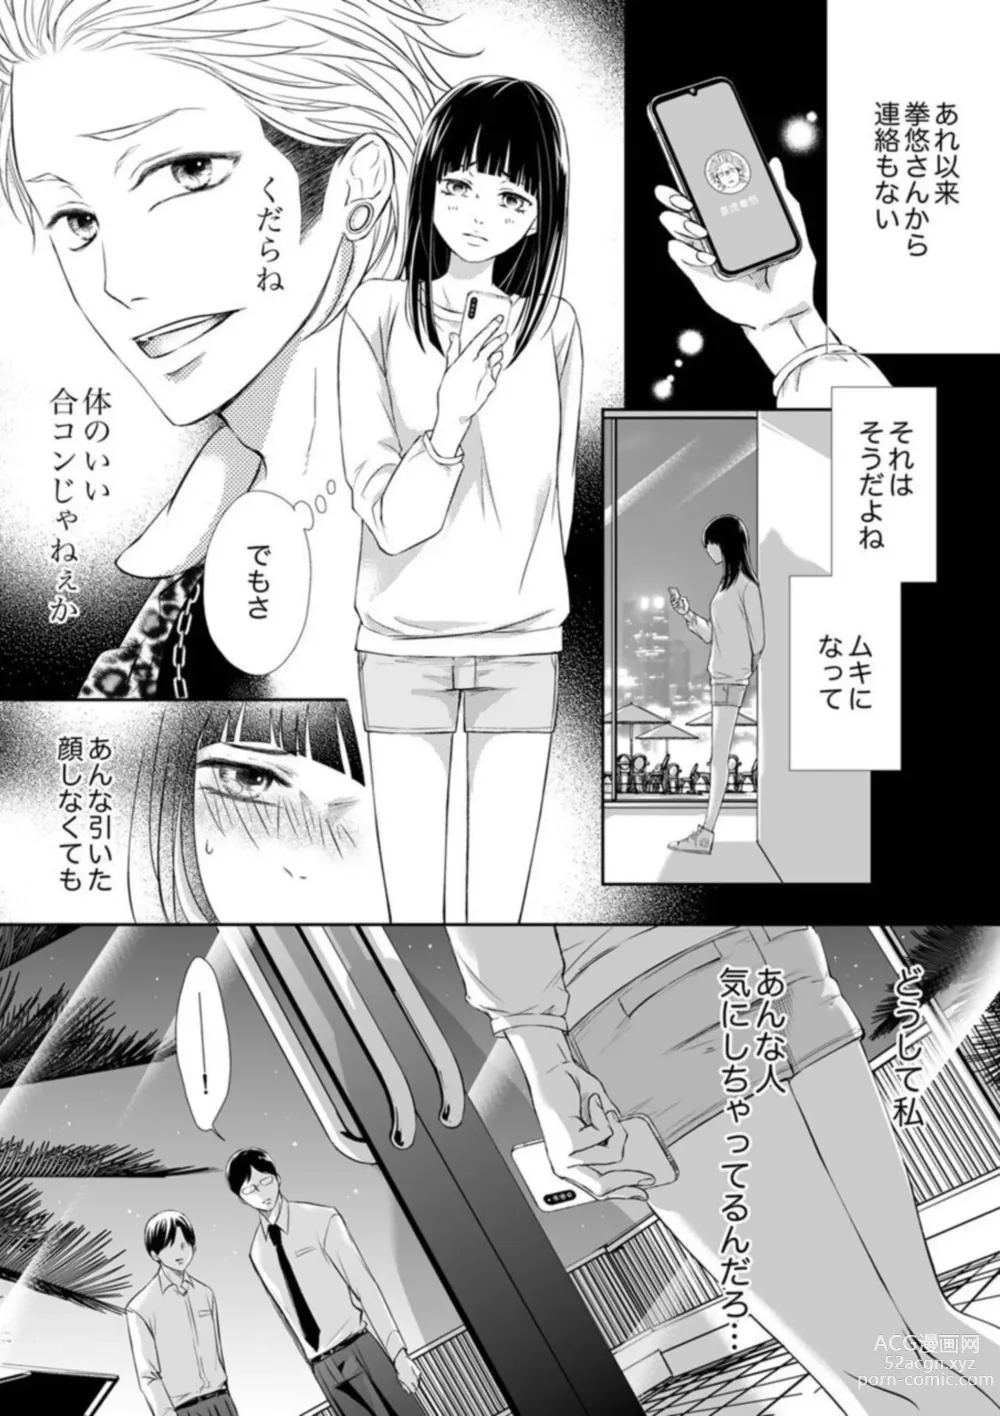 Page 16 of manga Juusei to Aegigoe ~ Uchinuku Tabi ni, Kikasero yo - Gun shot and Panting 1